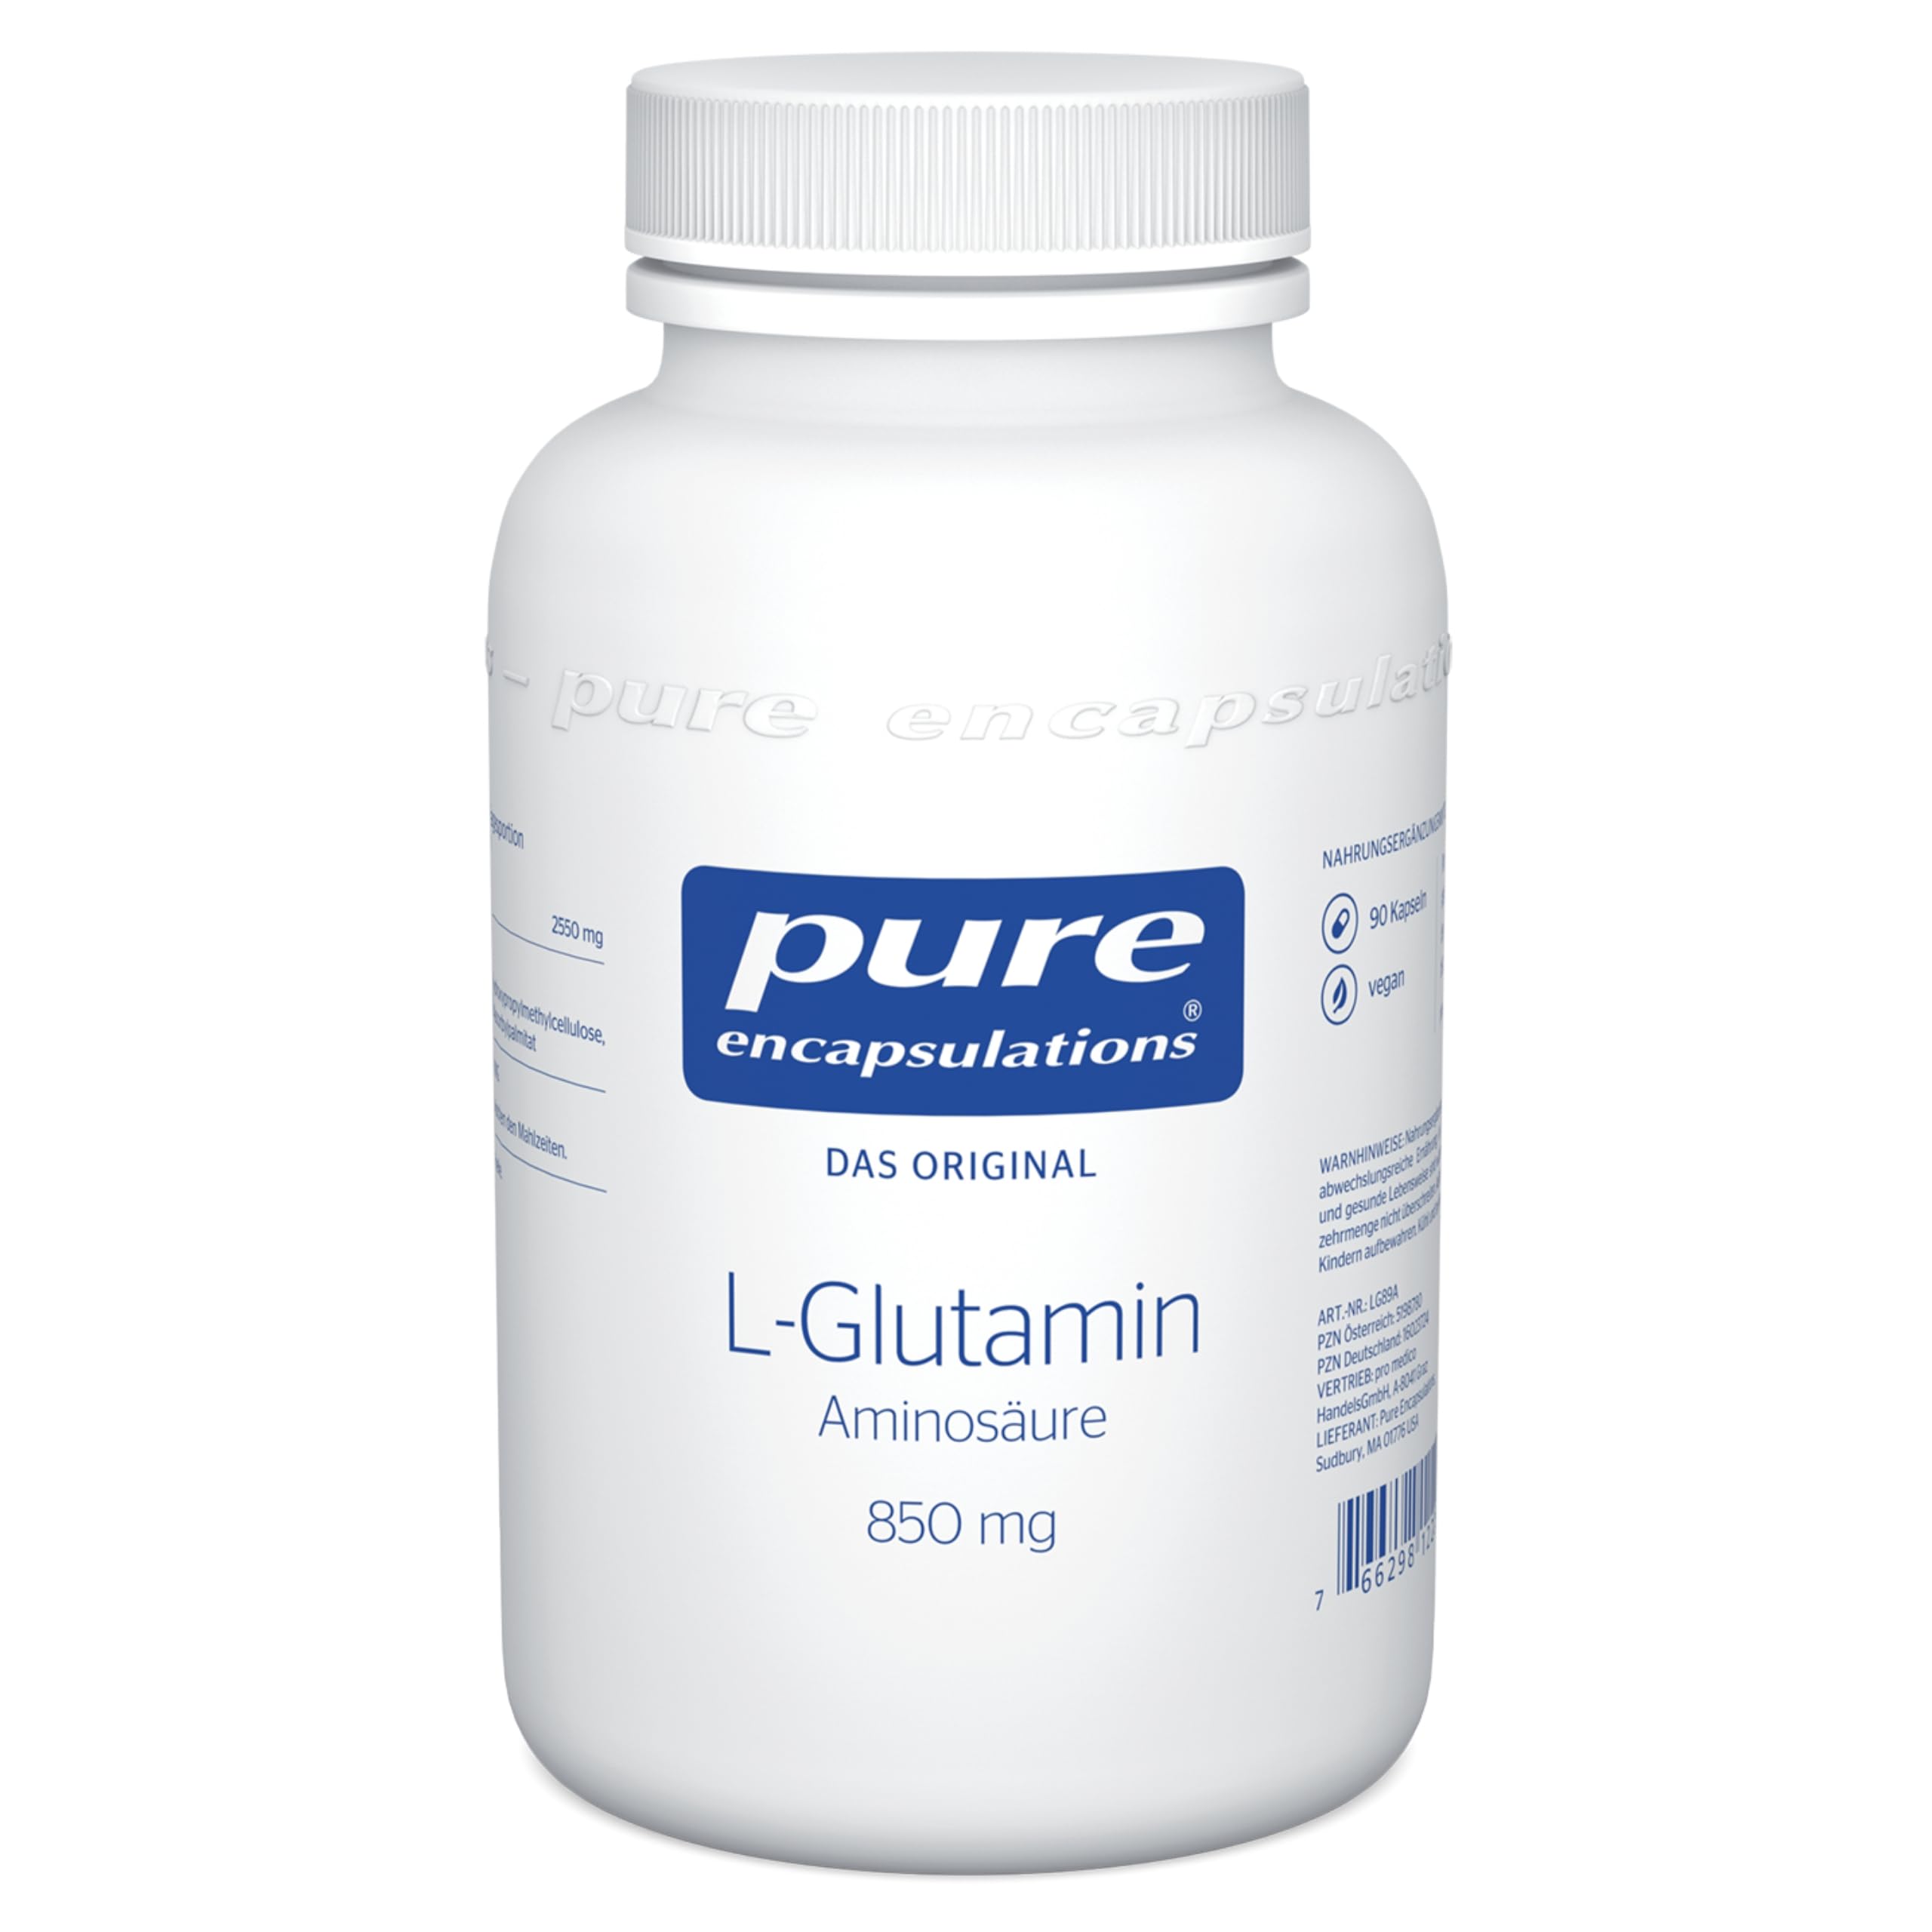 Pure Encapsulations L-Glutamin 850mg - Aminosäure - 90 Kapseln